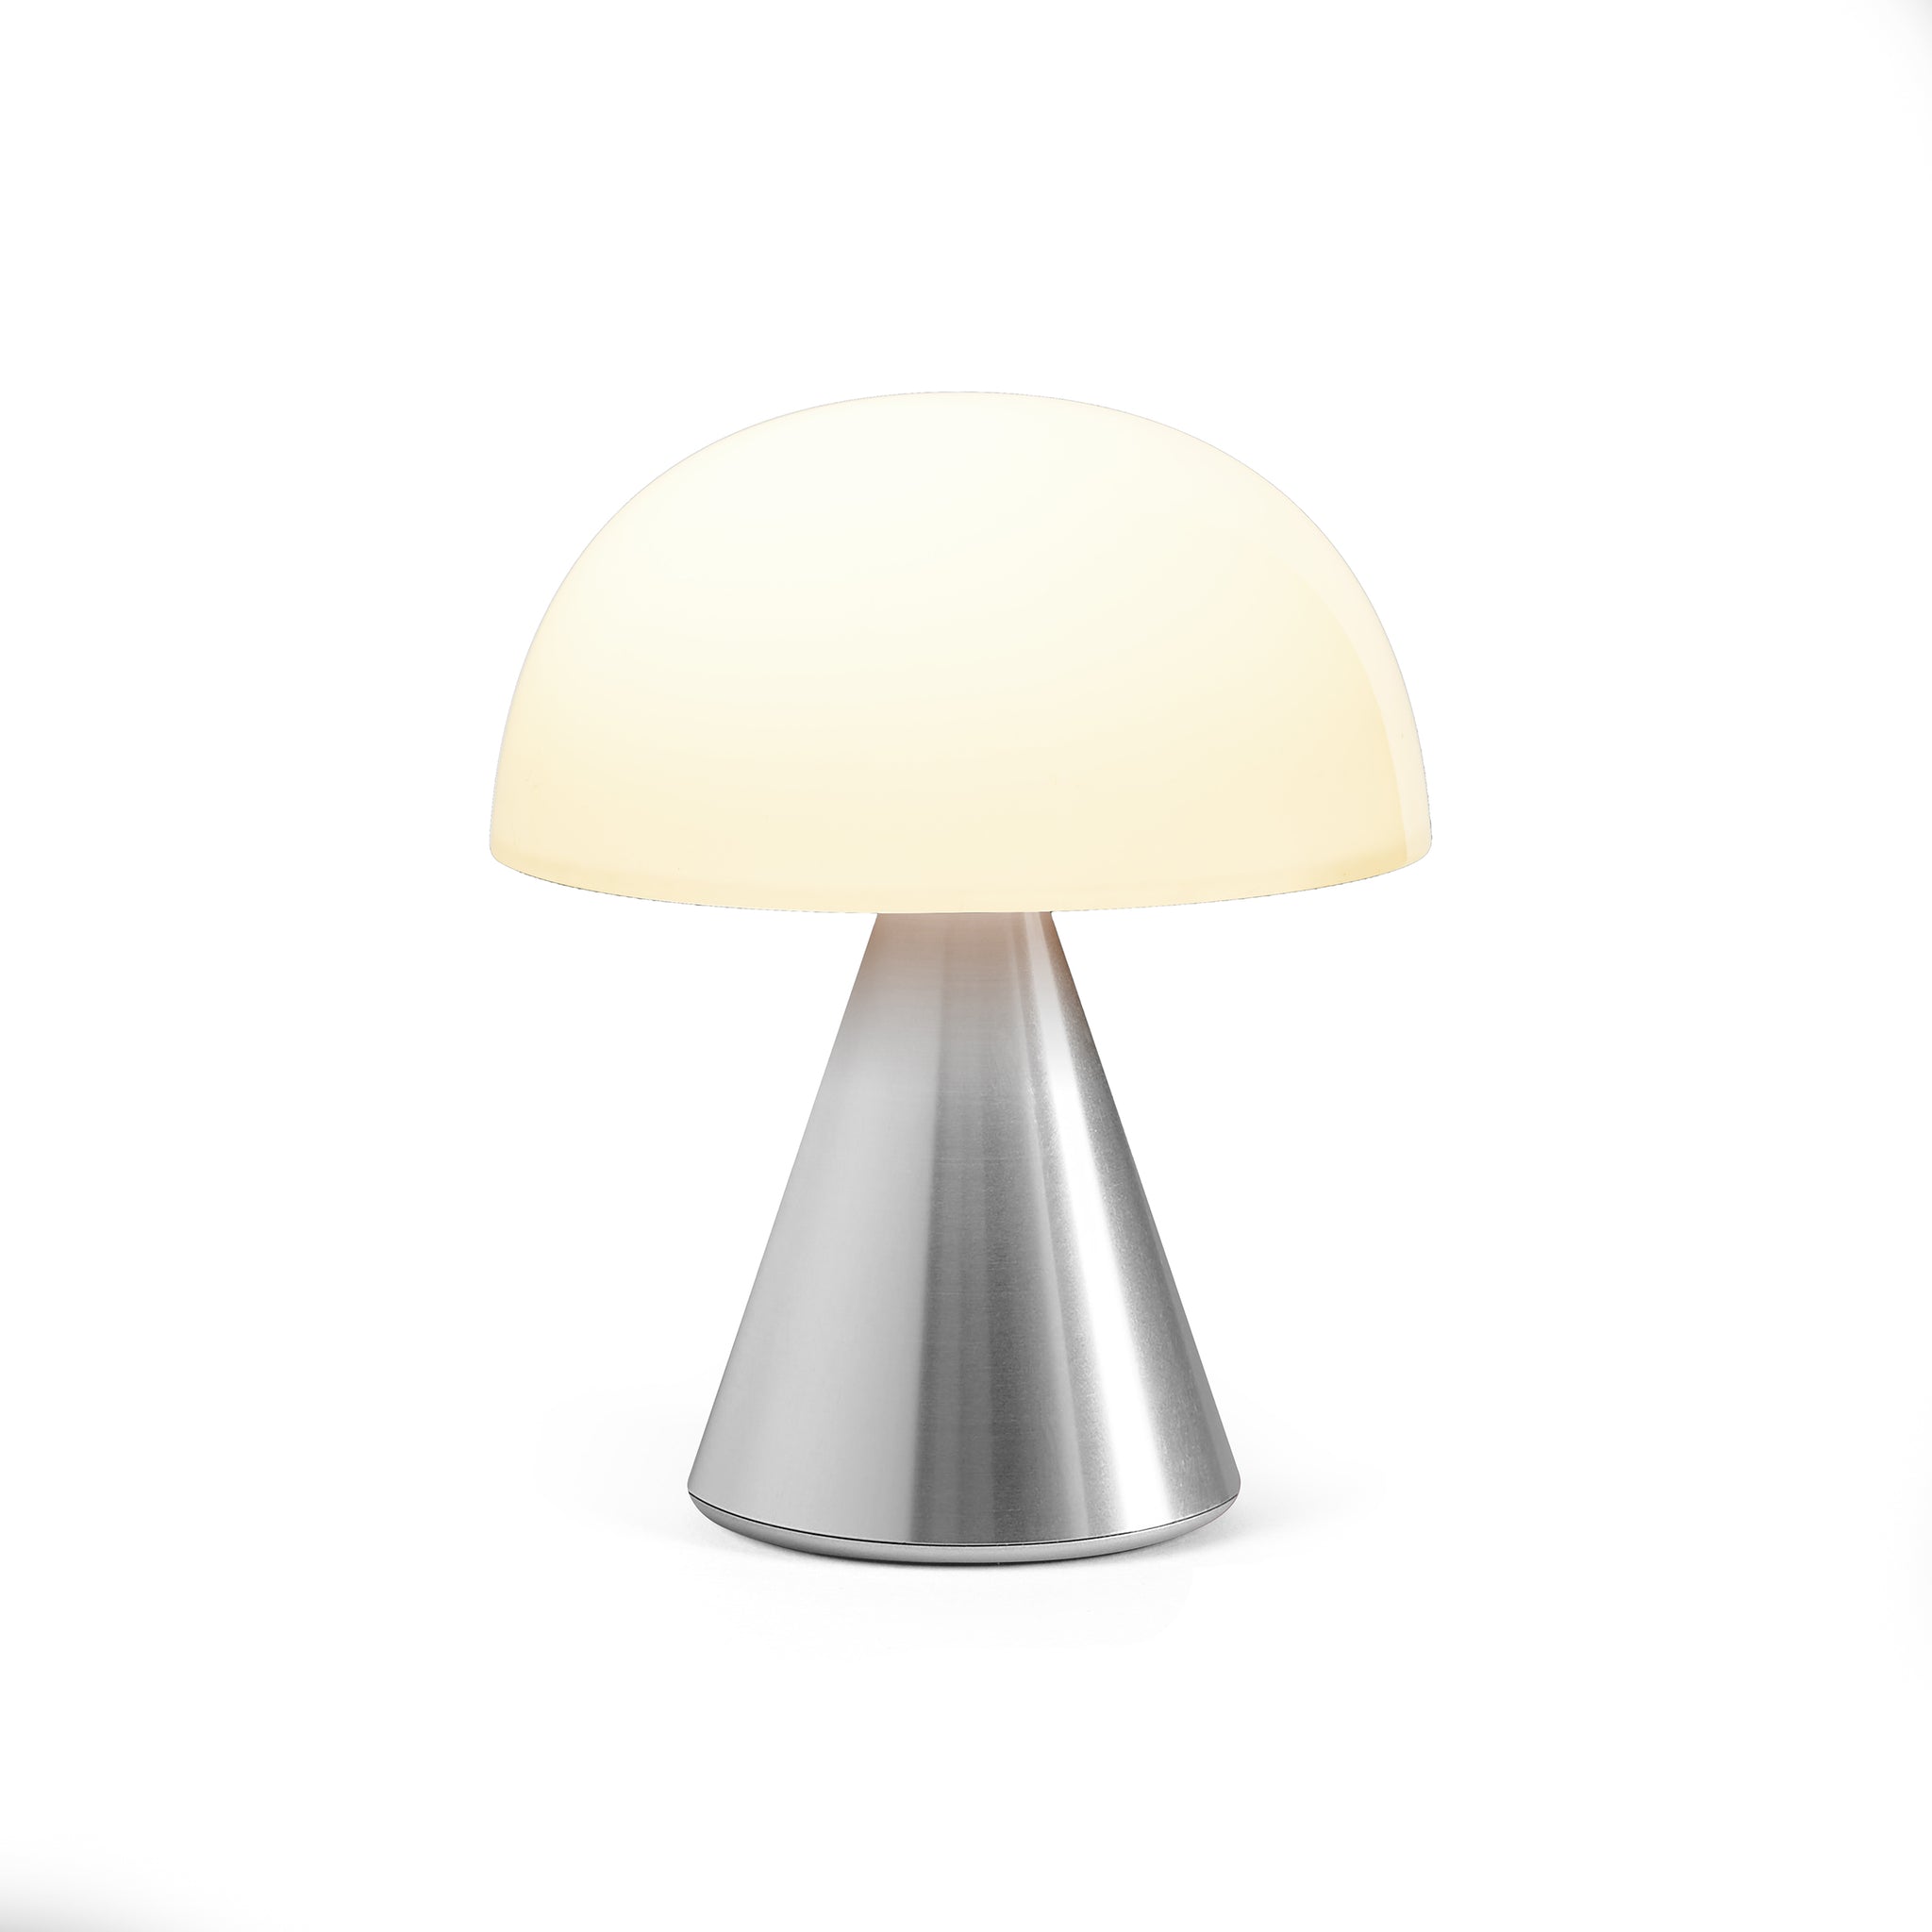 Lexon Mina Medium Aluminium│Oplaadbare LED-Lamp│art. LH64MAP│vooraanzicht met warm licht aan en witte achtergrond